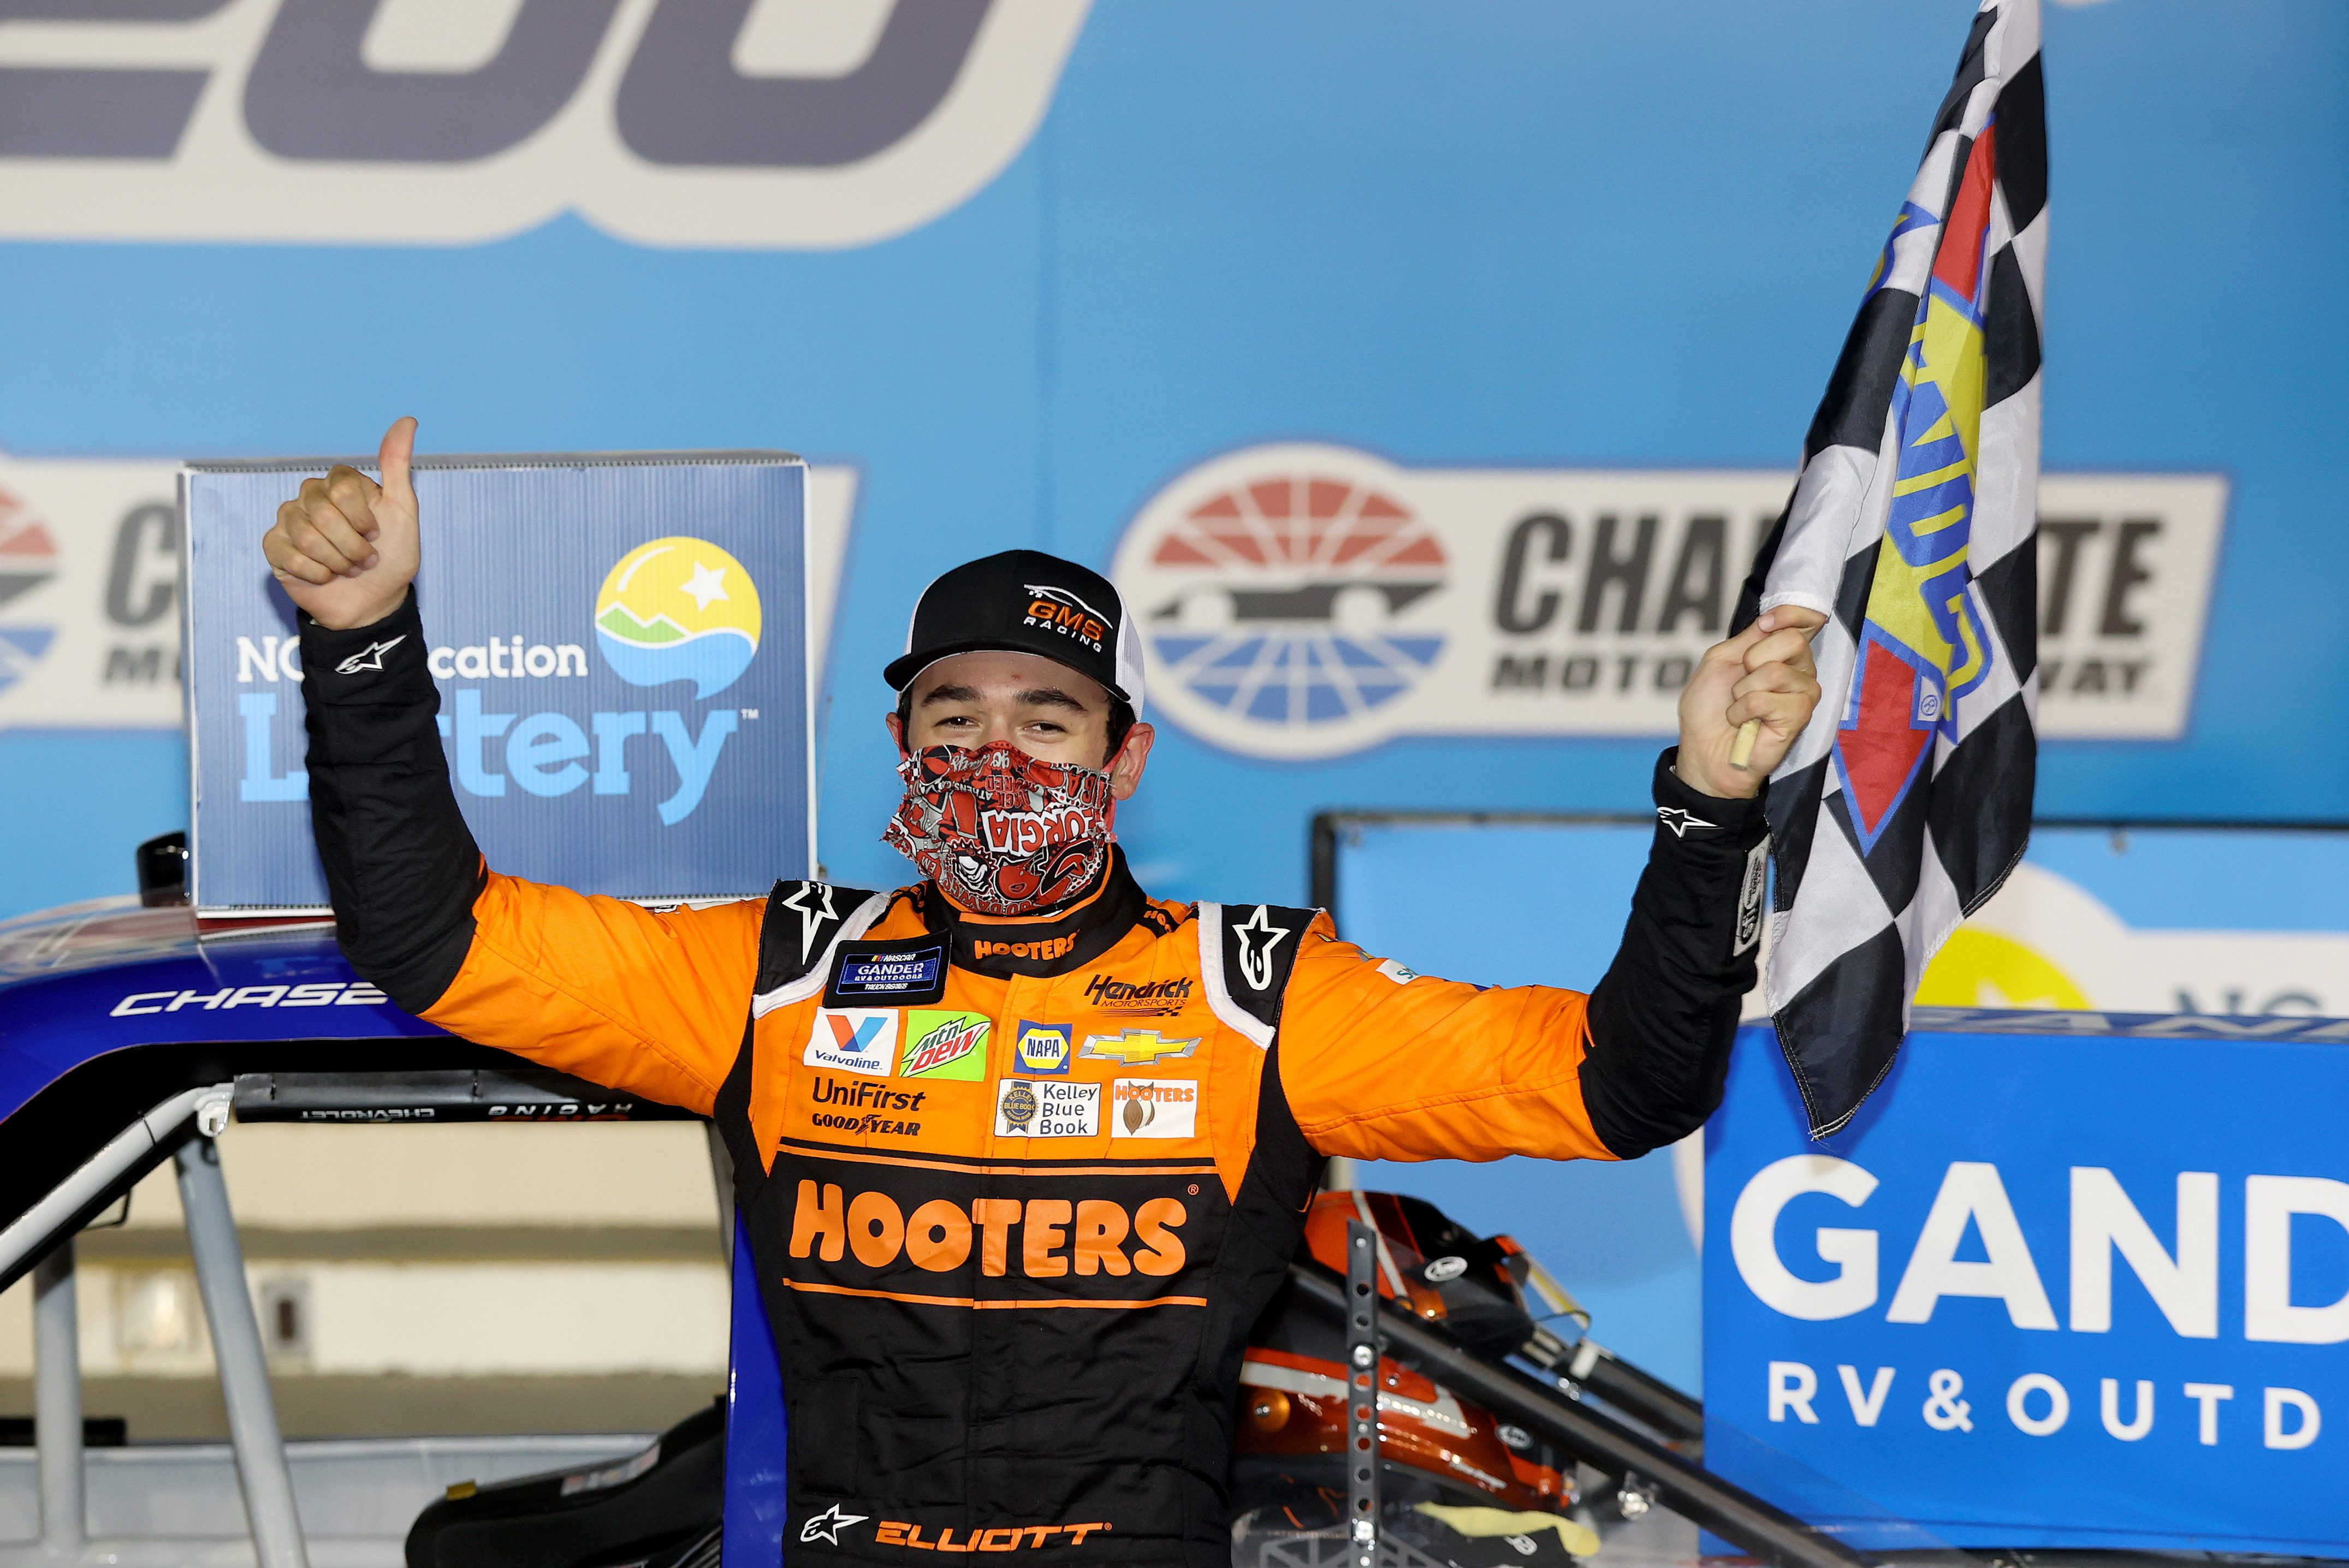 Chase Elliott celebrates in Victory Lane after winning the NASCAR Gander Outdoors Trucks Series. (Chris Graythen/Getty)